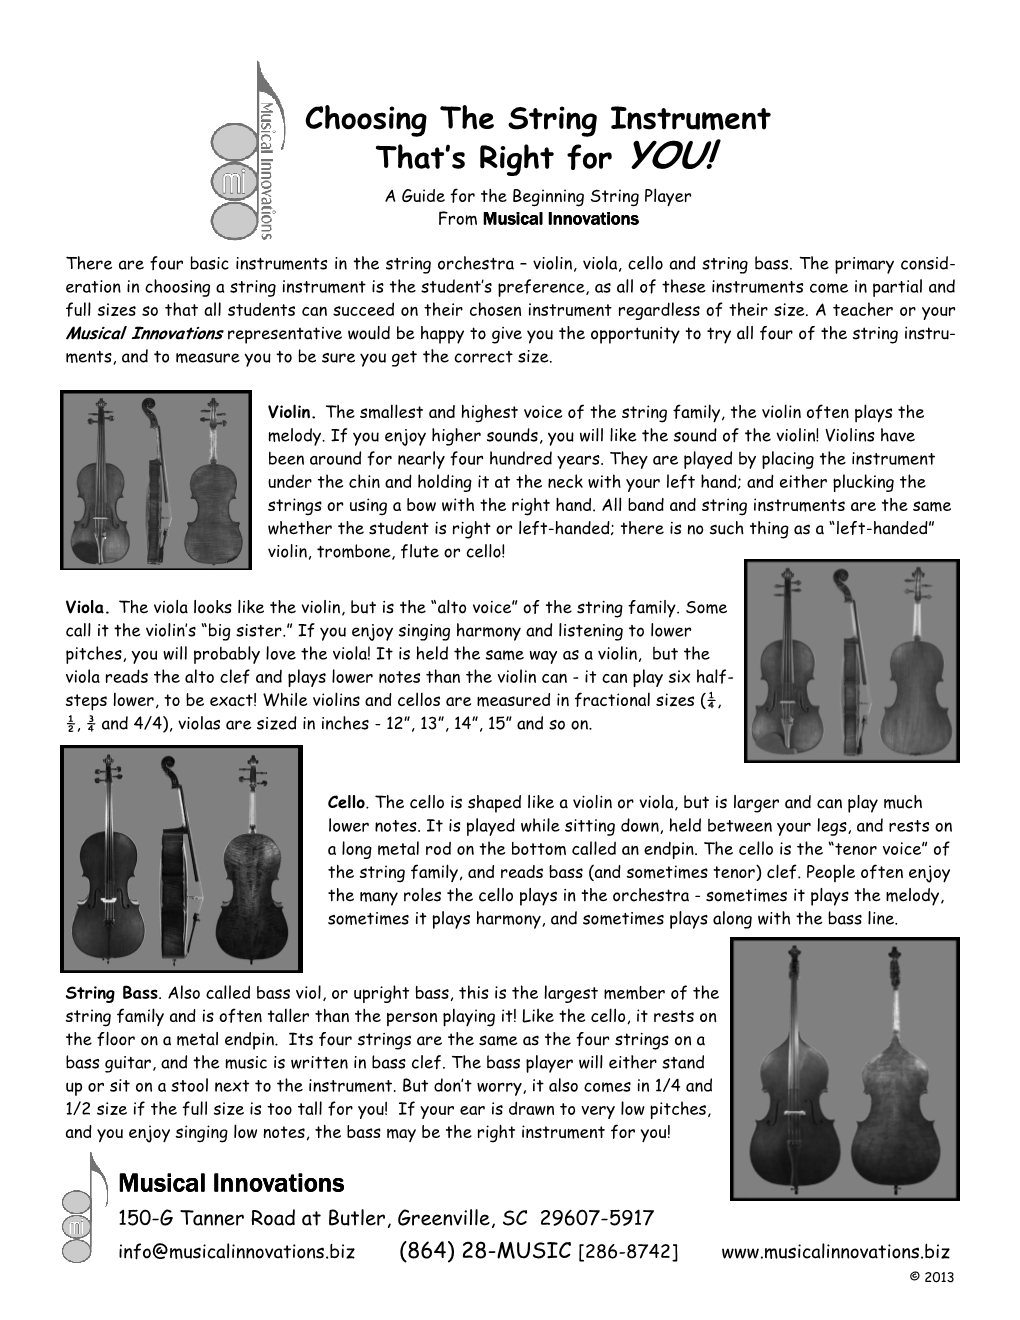 Choosing the Right String Instrument